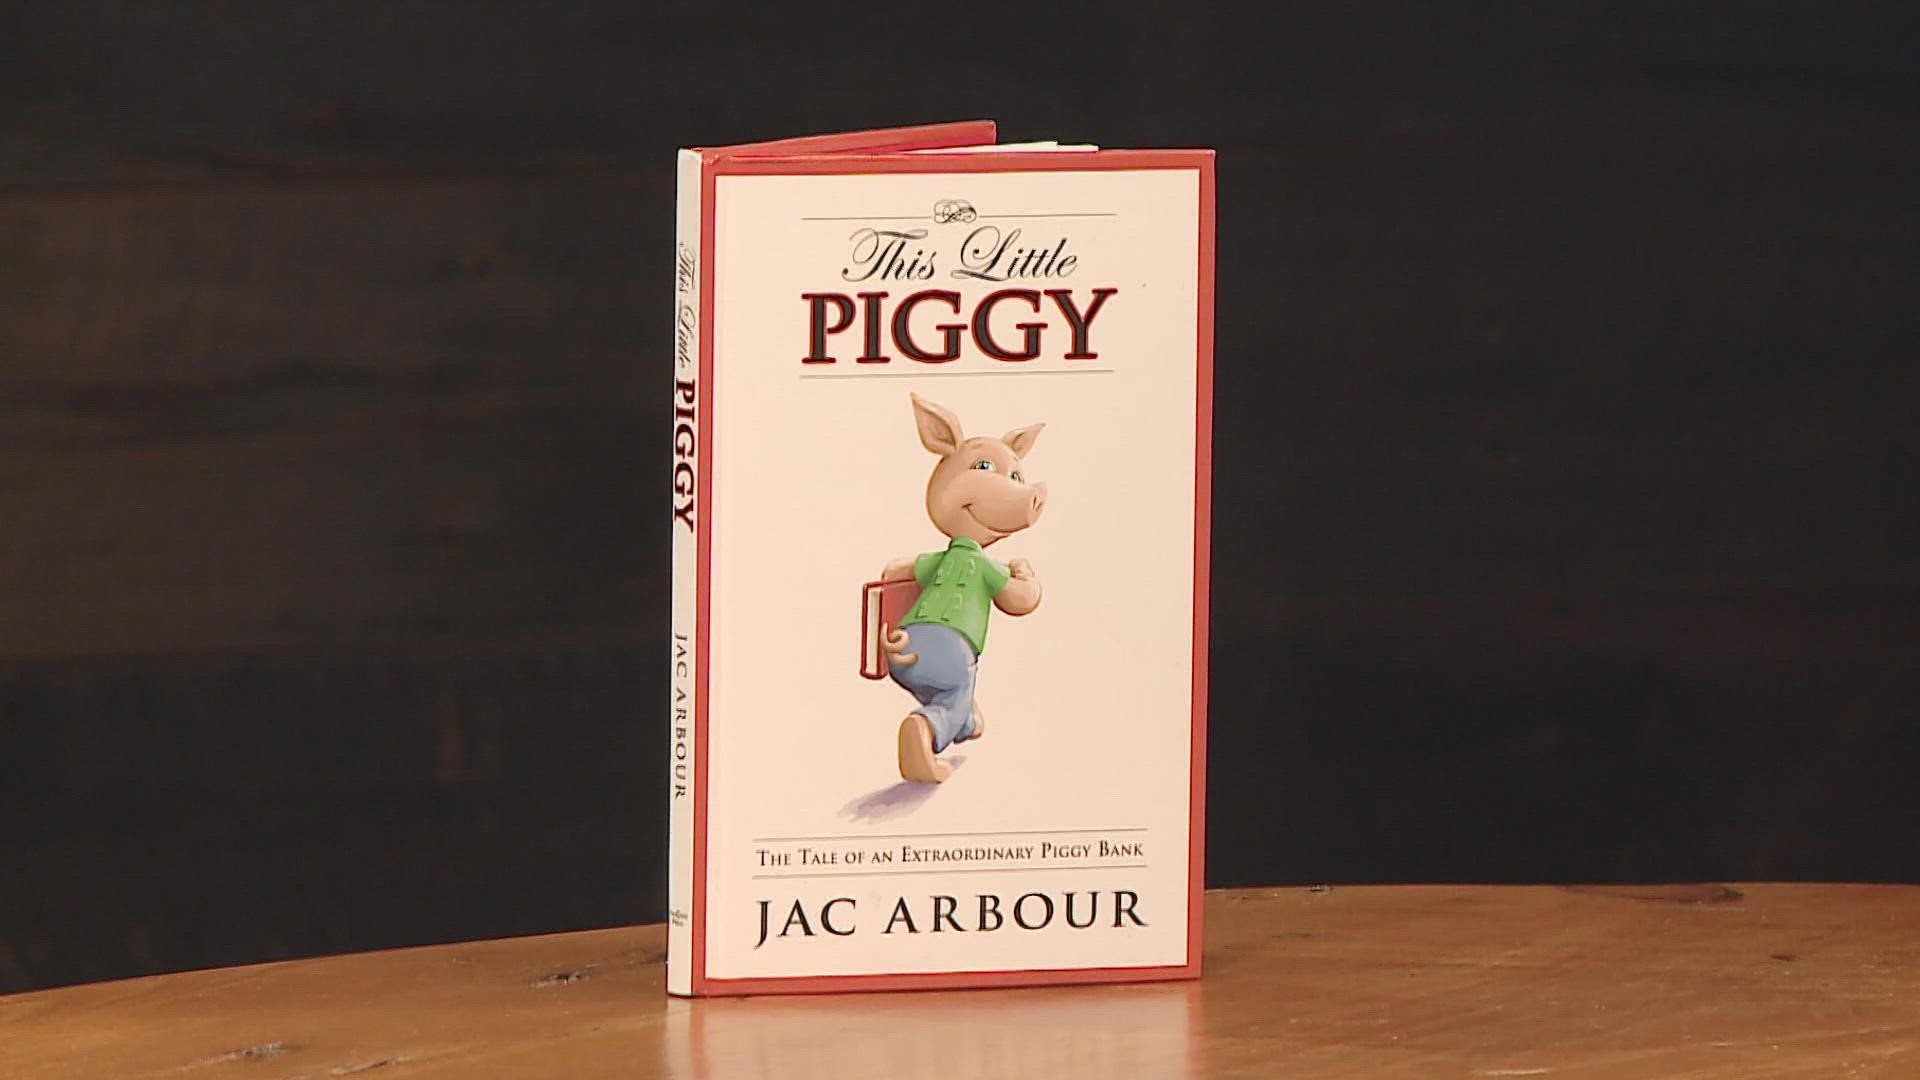 Jac Arbour's book, "This Little Piggy," helps kids build a better future.